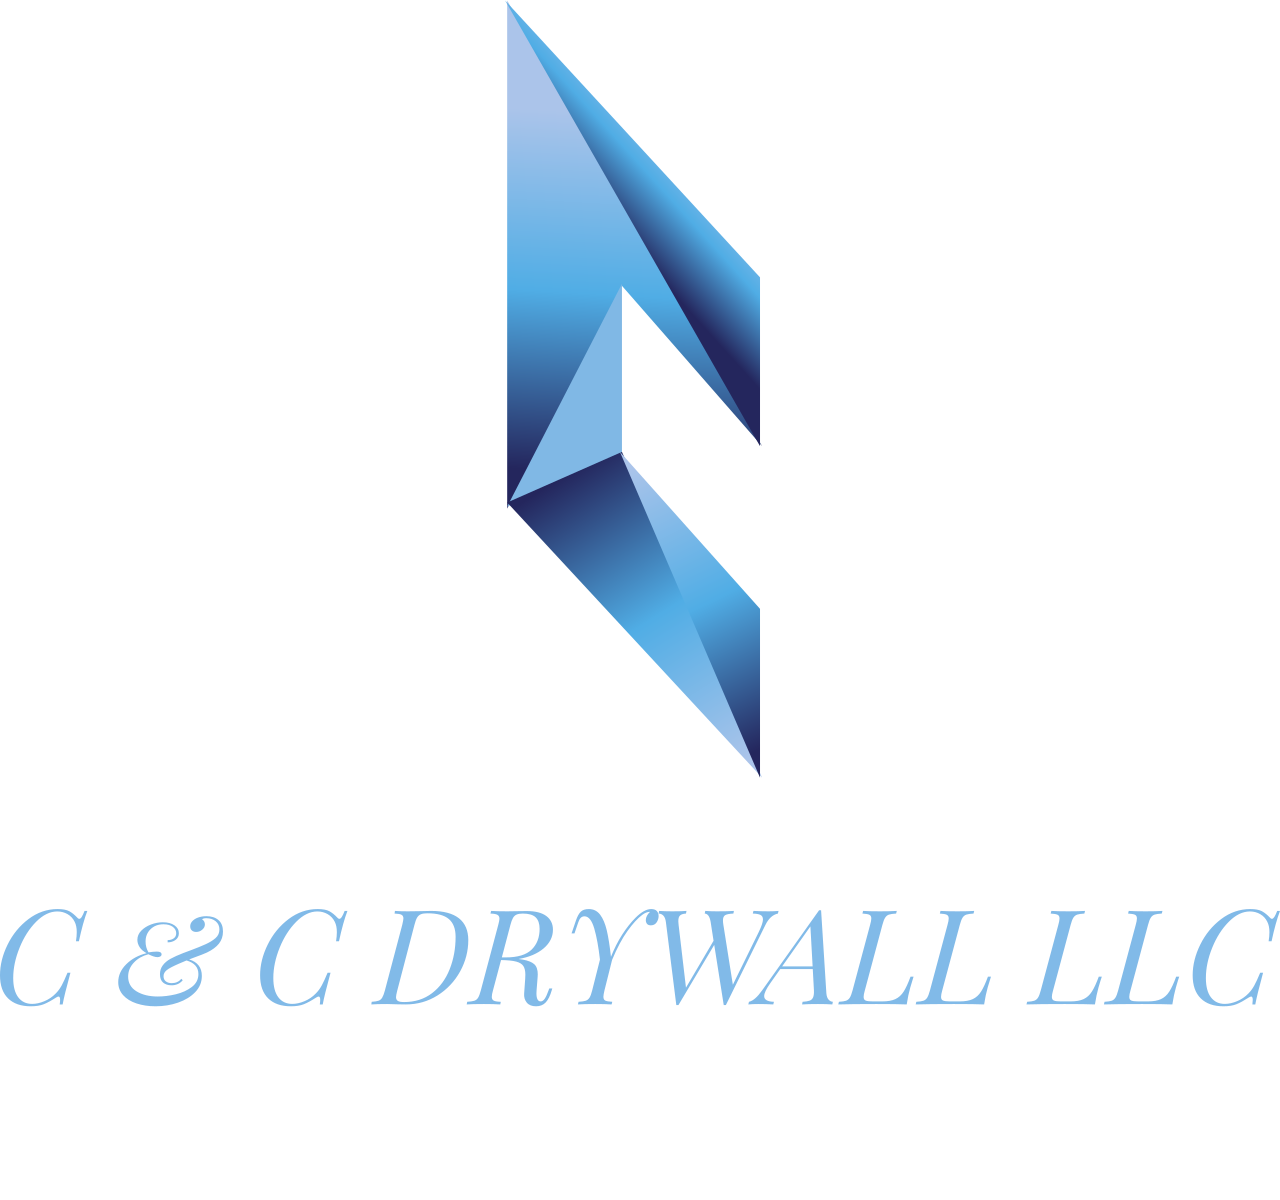 C & C DRYWALL LLC's web page